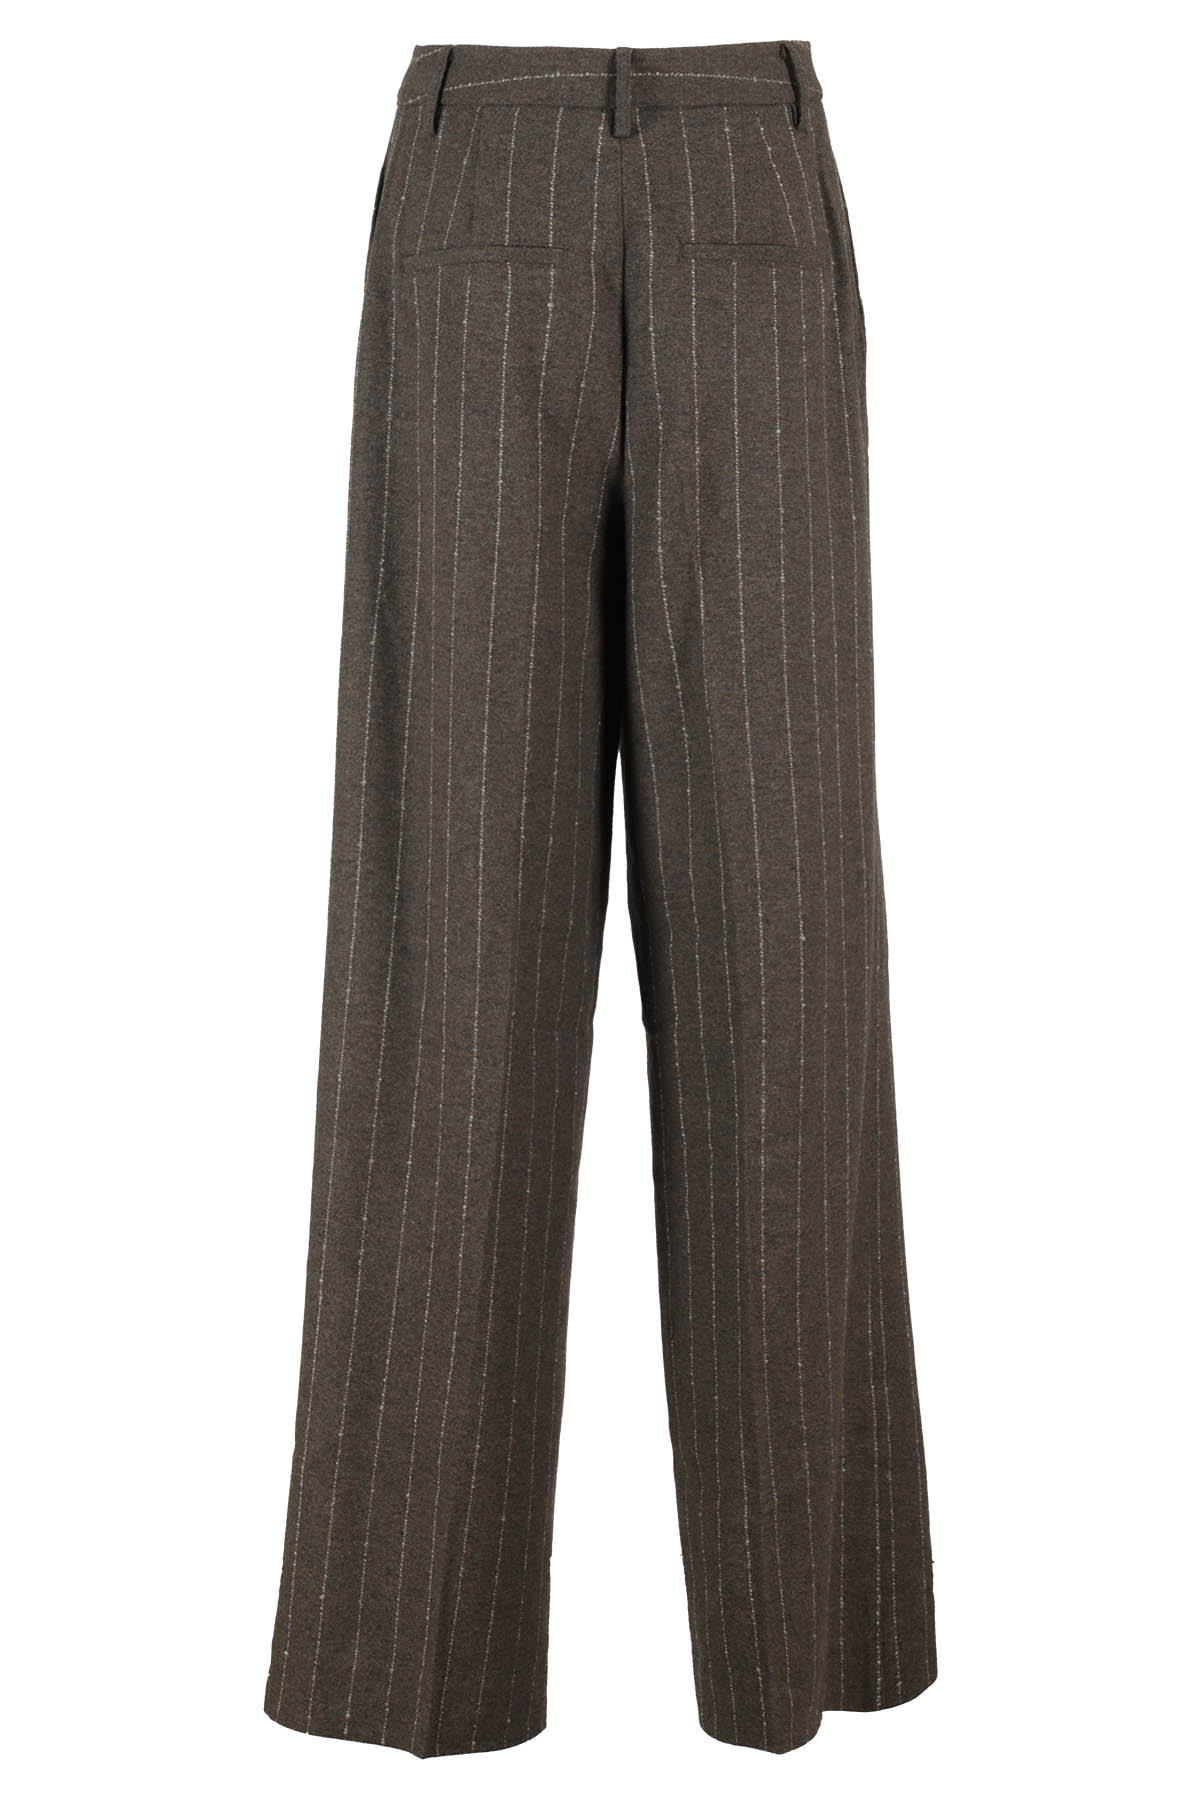 Shop Remain Birger Christensen Pinstripe Wide Pants